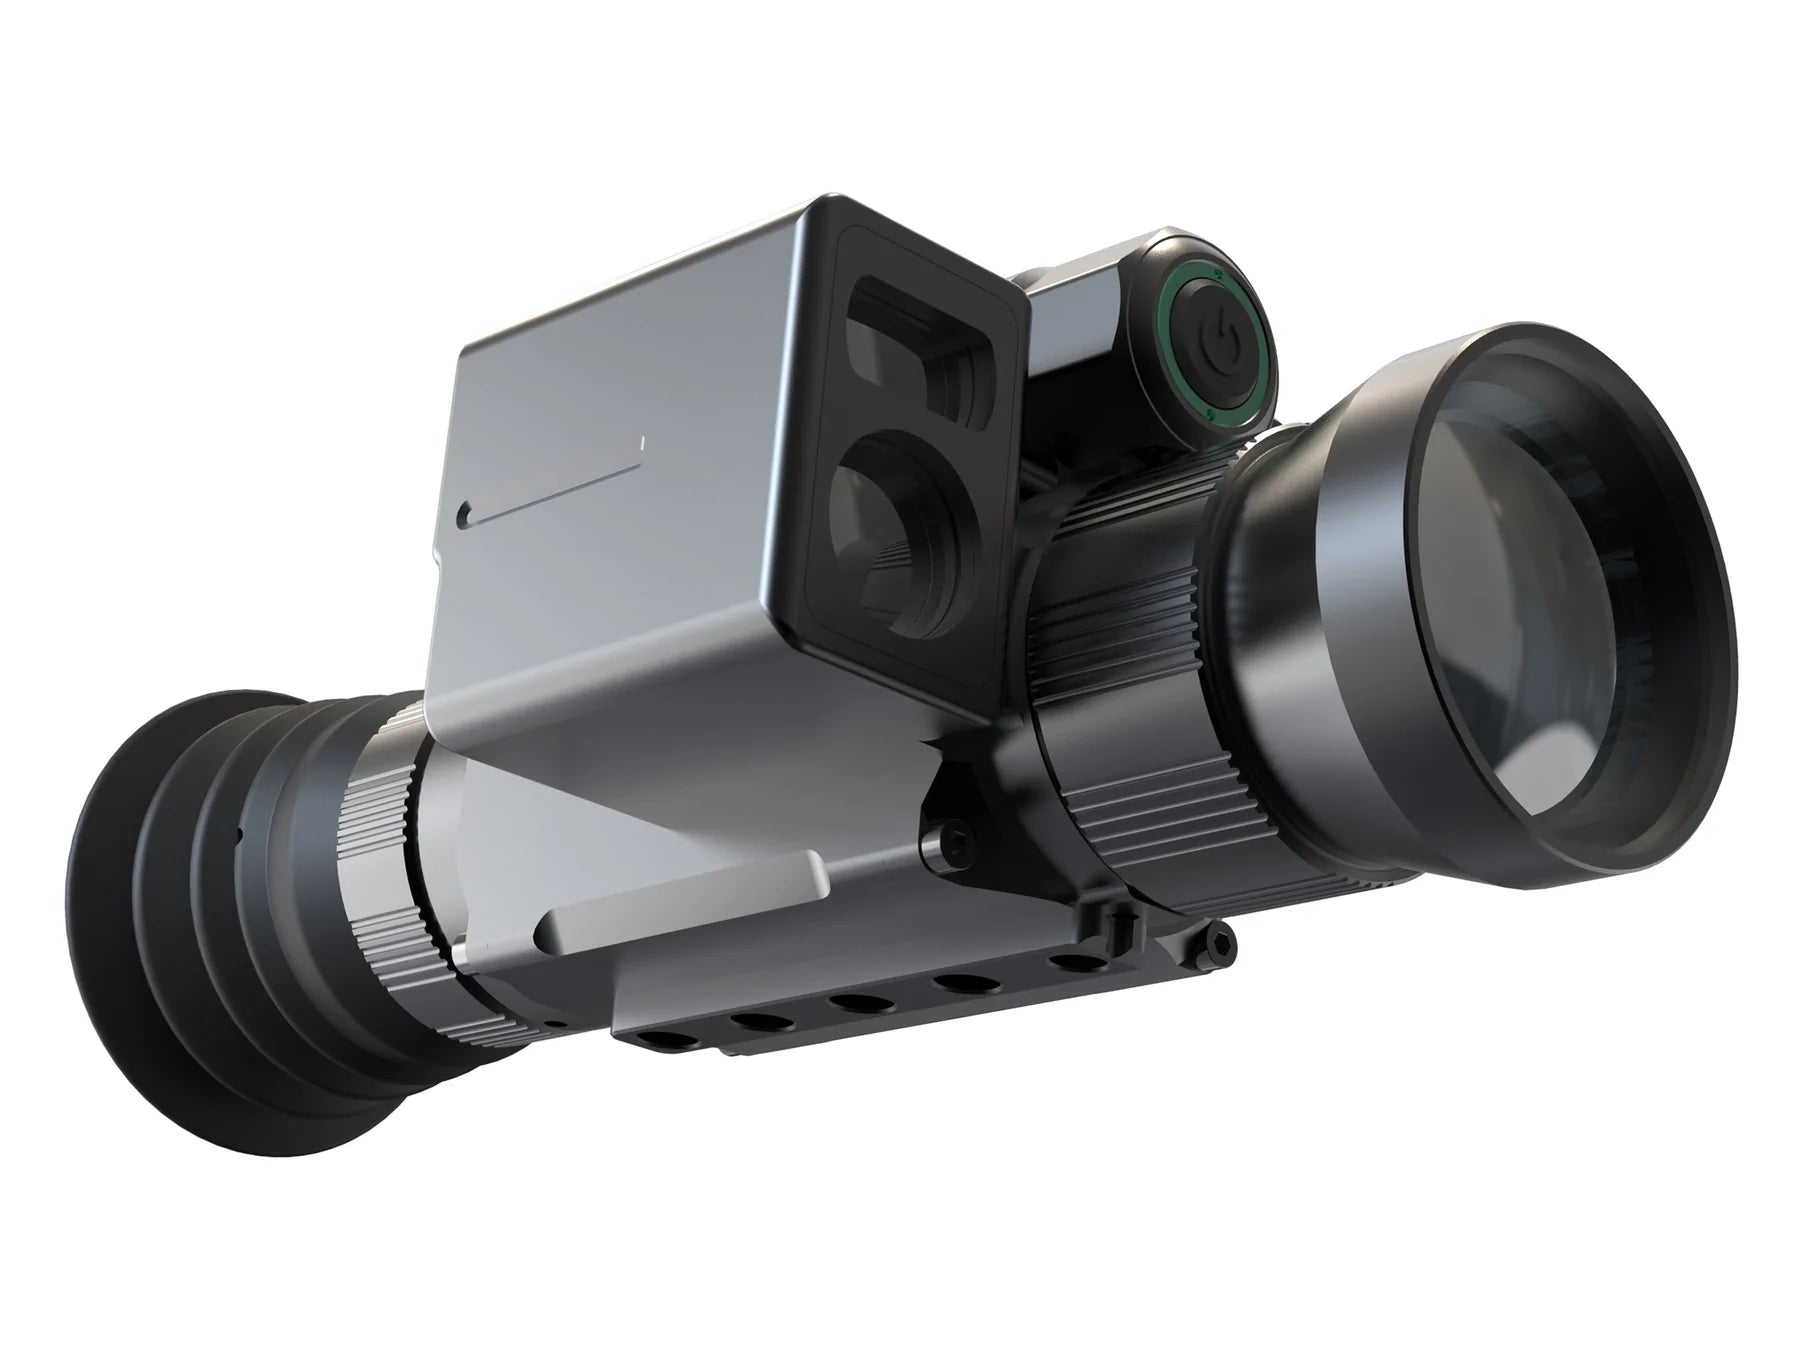 SU LRF Thermal Sight with Rangefinder